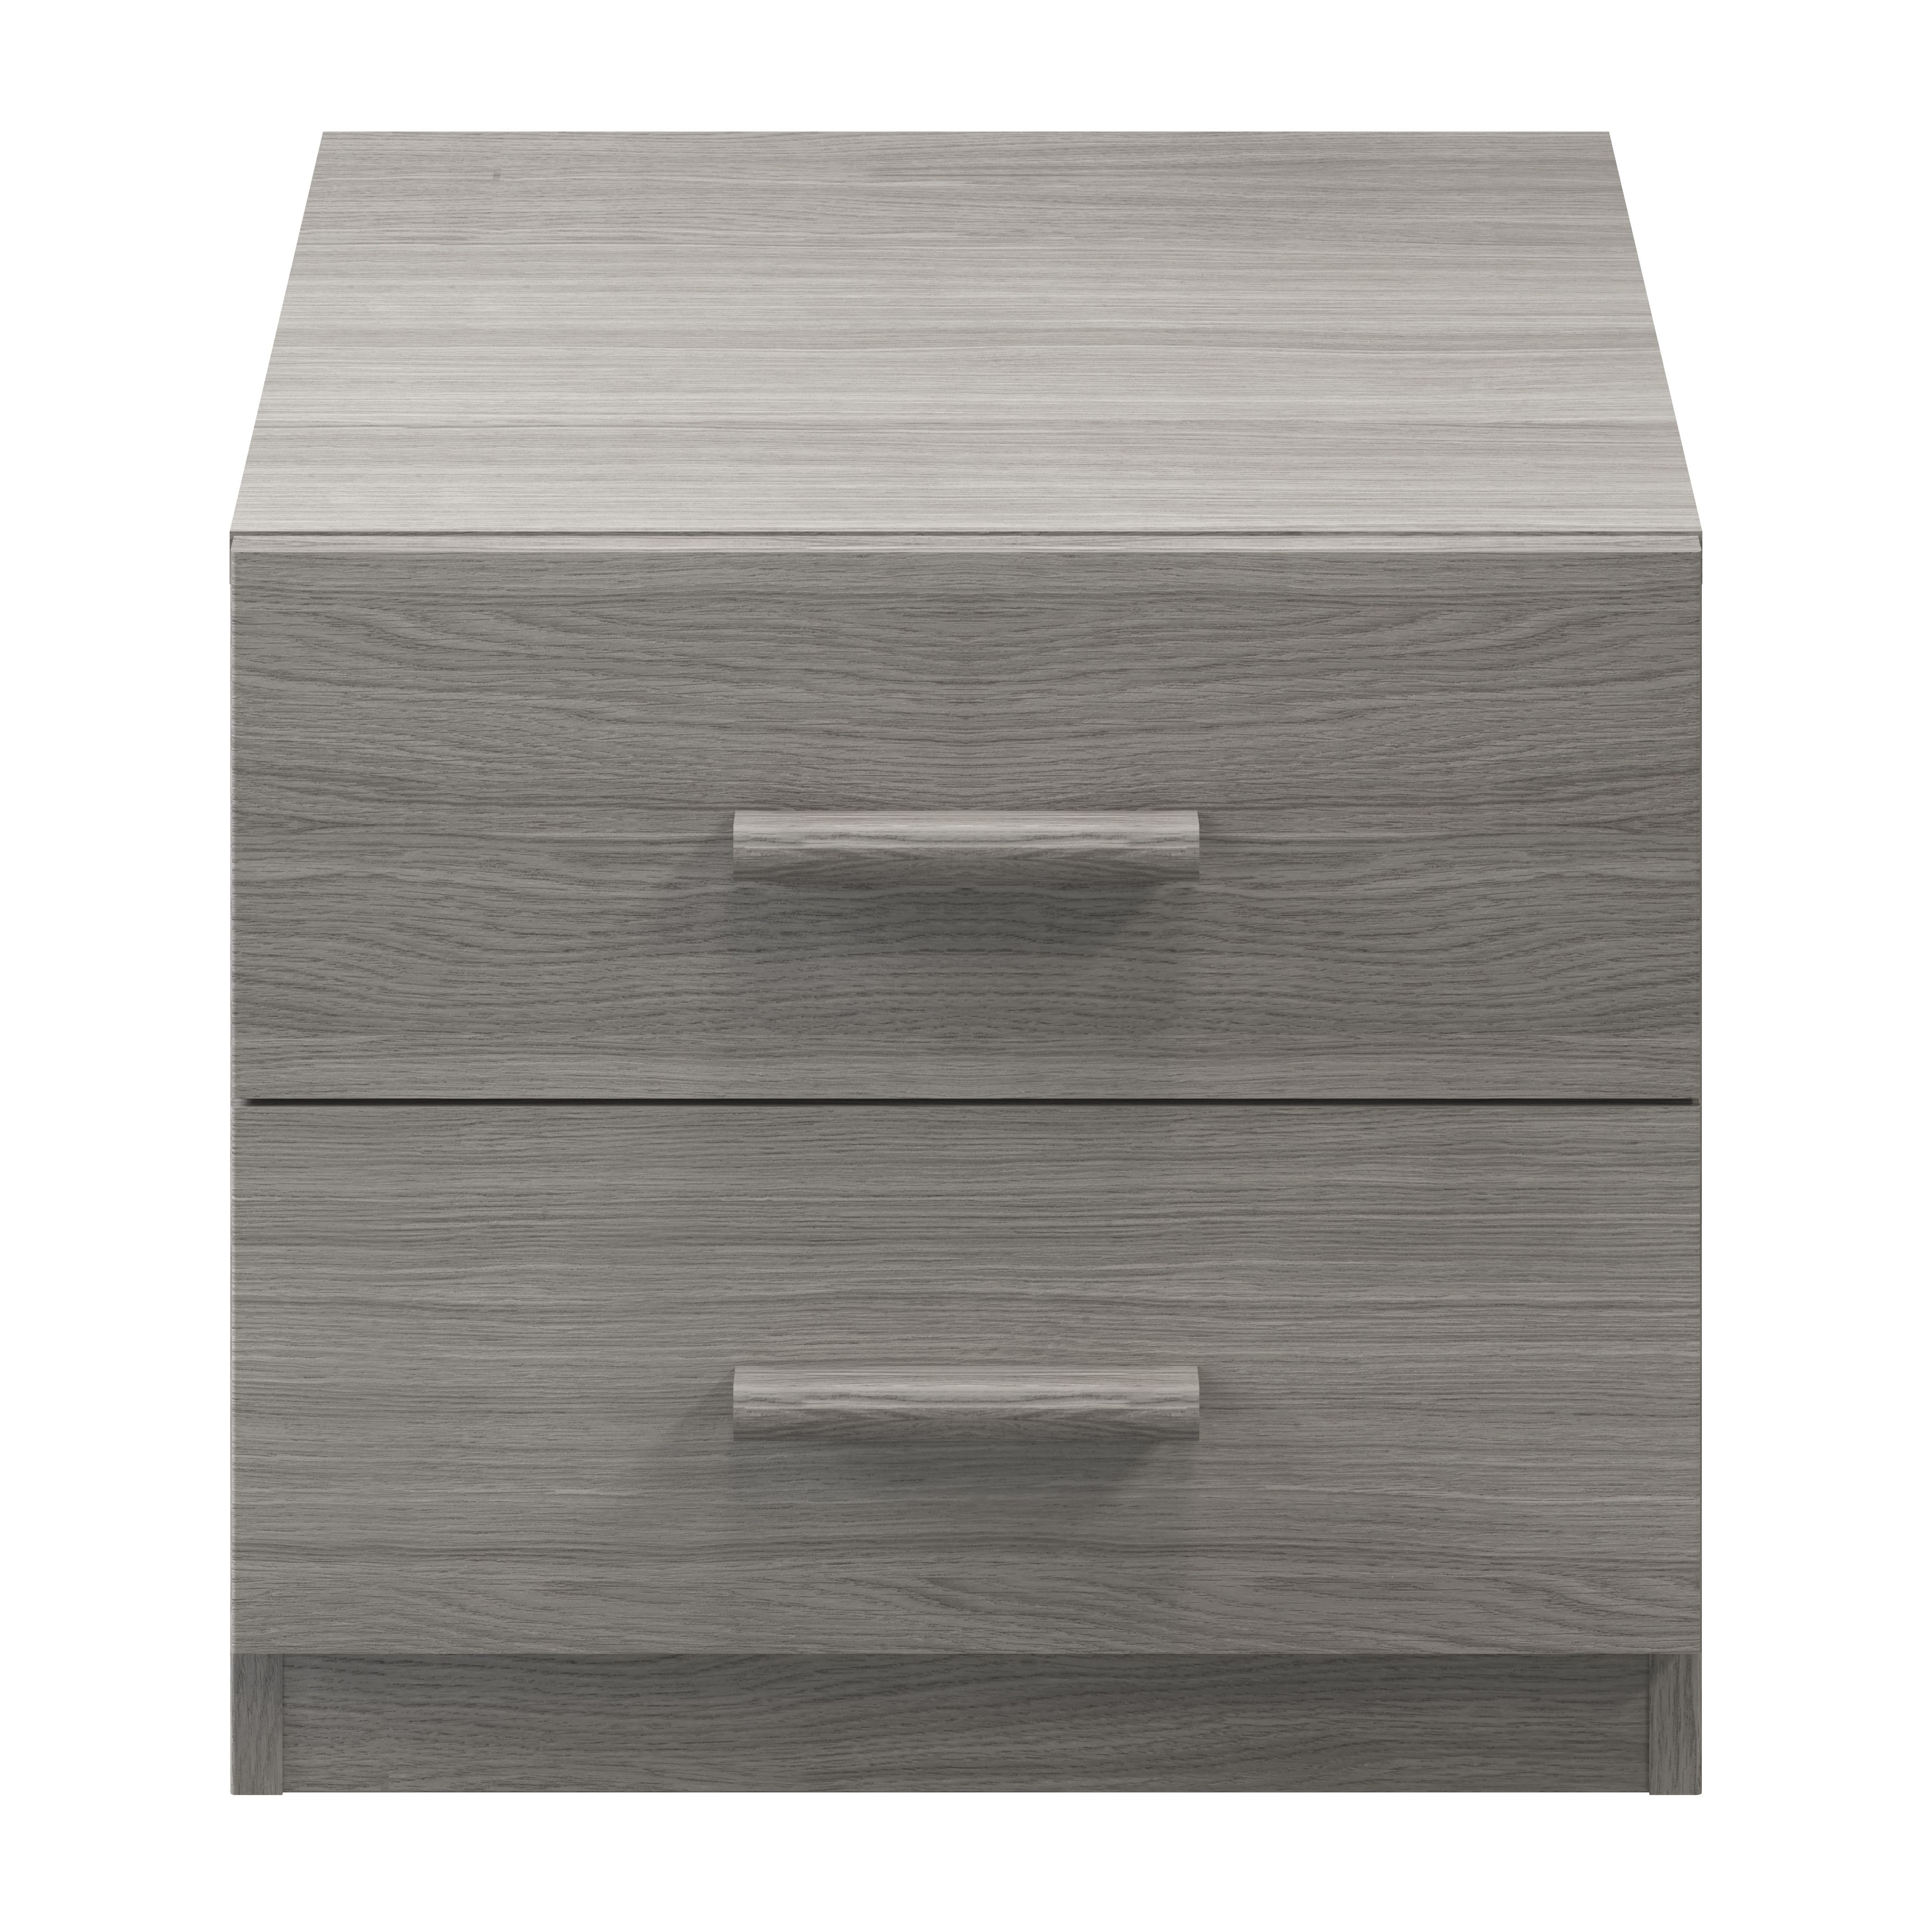 Atomia Freestanding Matt grey oak effect 2 Drawer Bedside table (H)429mm (W)500mm (D)466mm